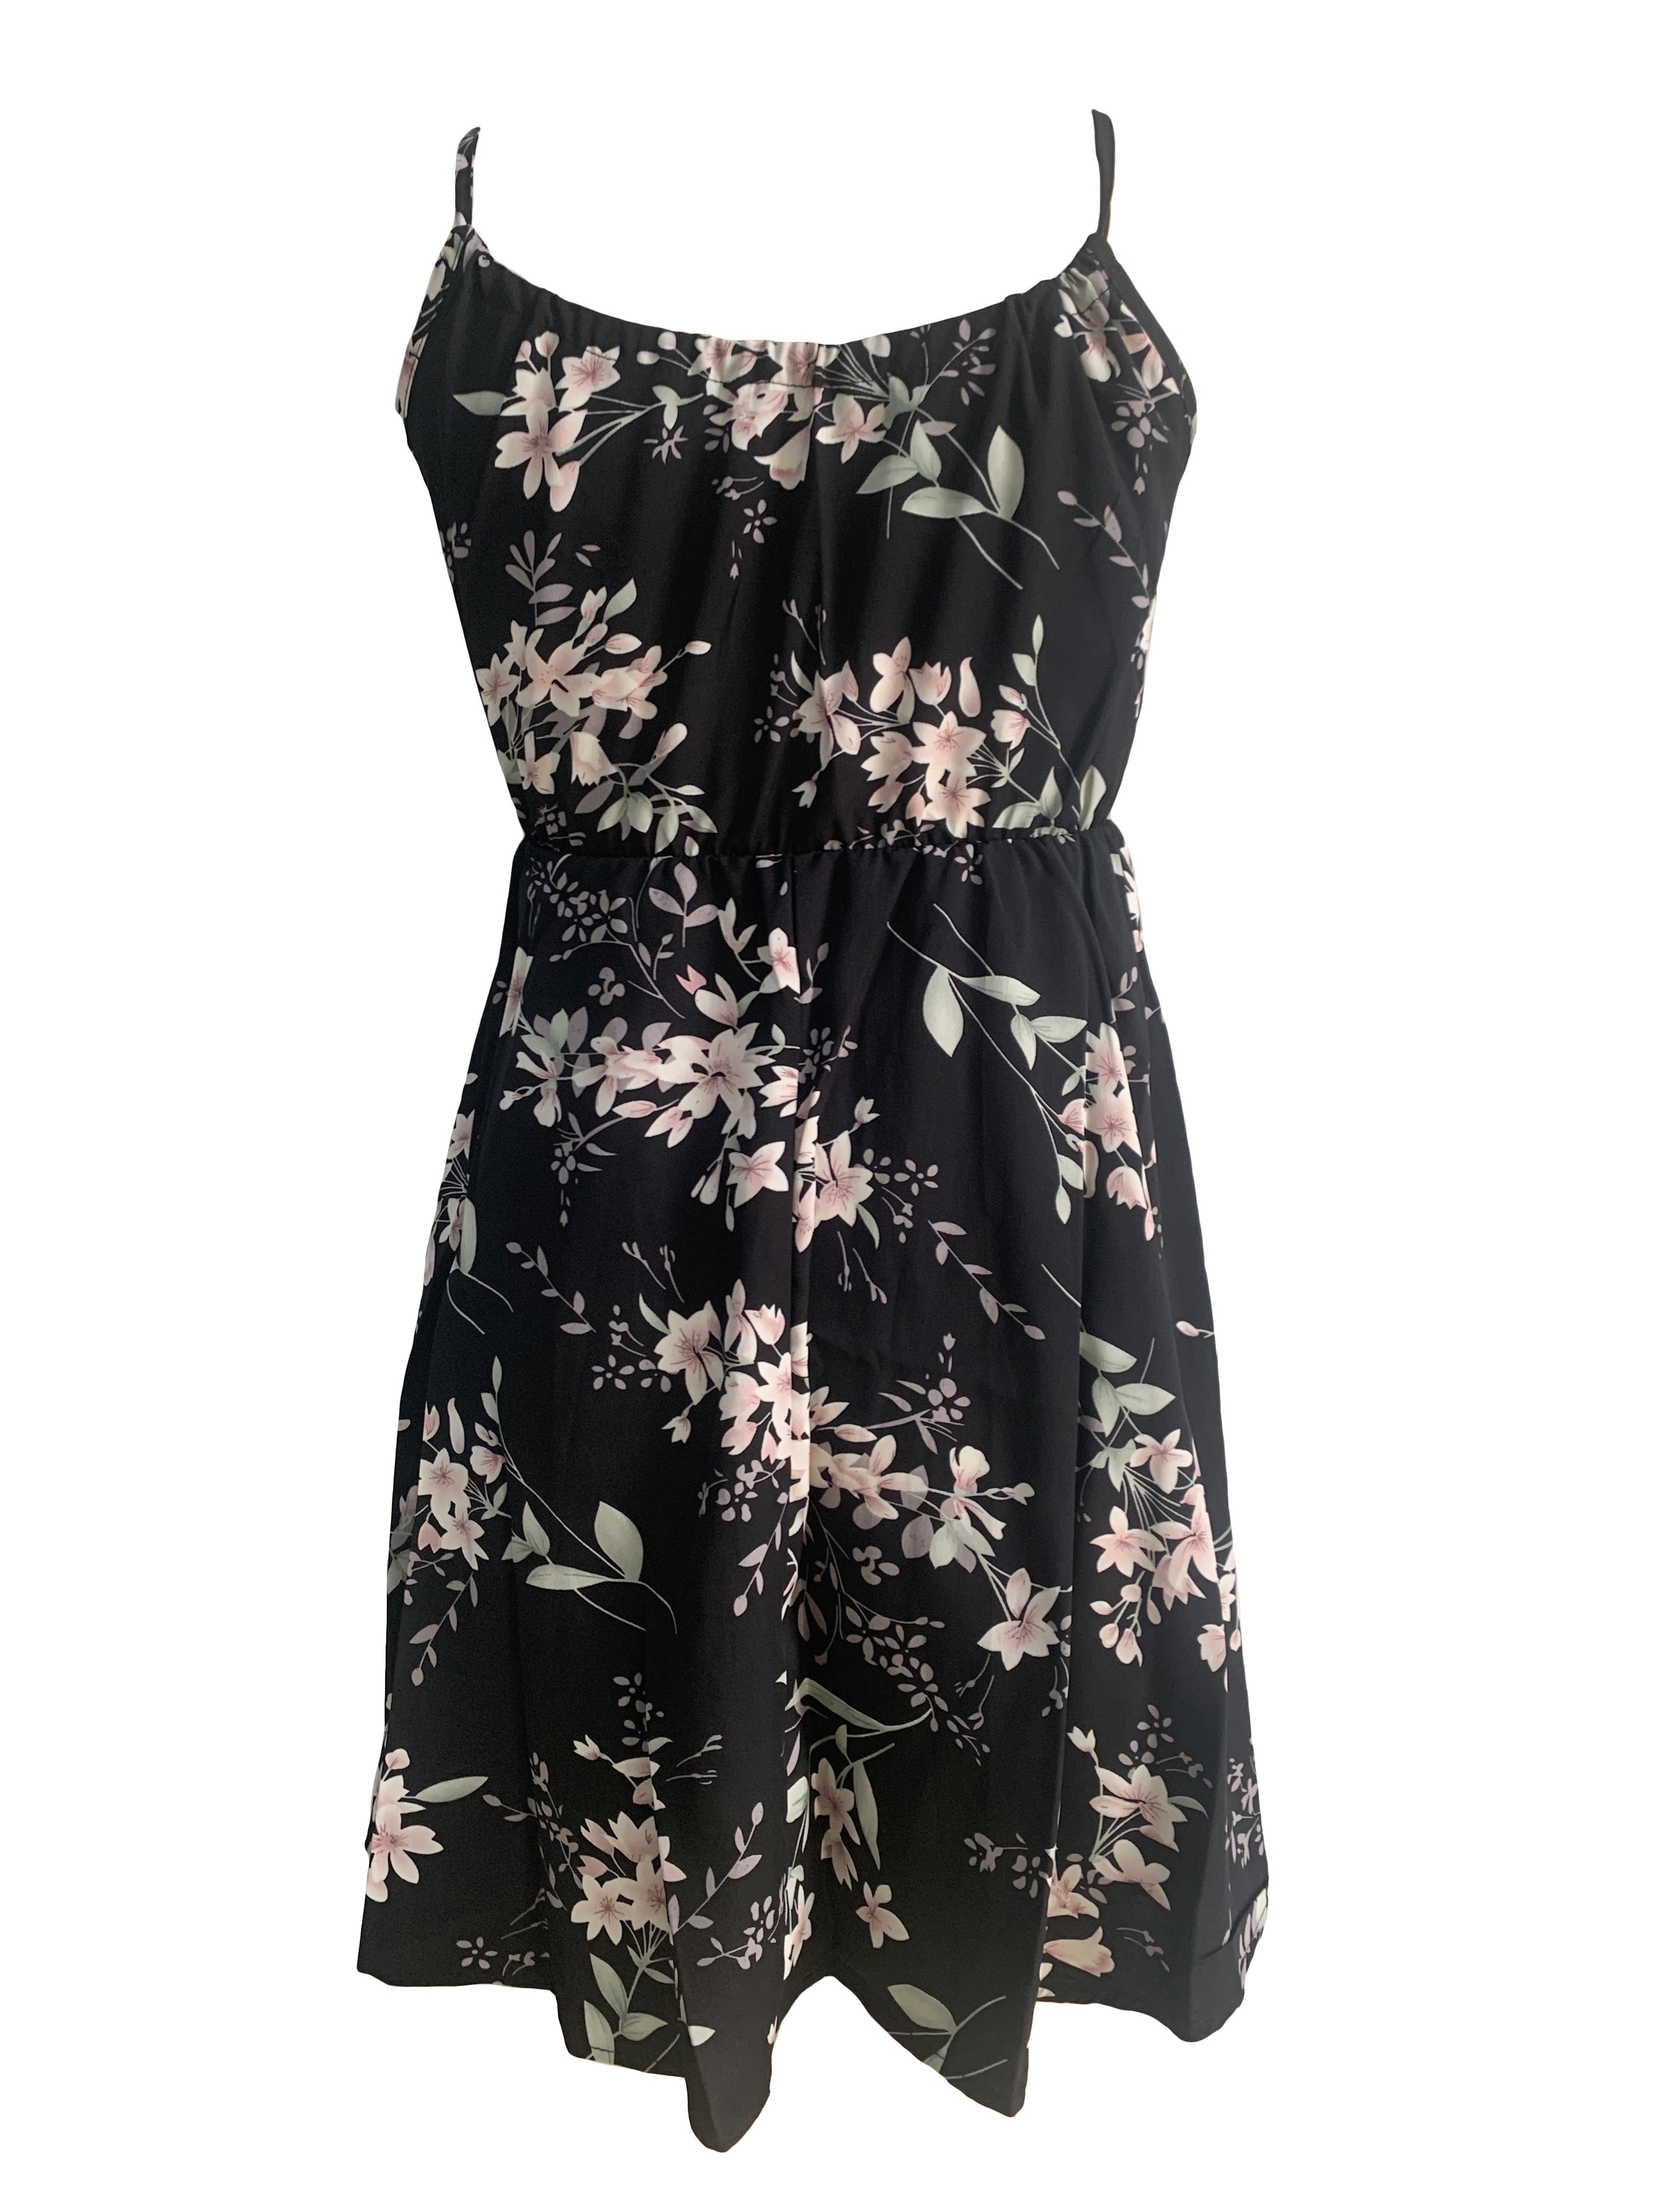 Floral Delight Dress Black, Shop Dresses Online from Review